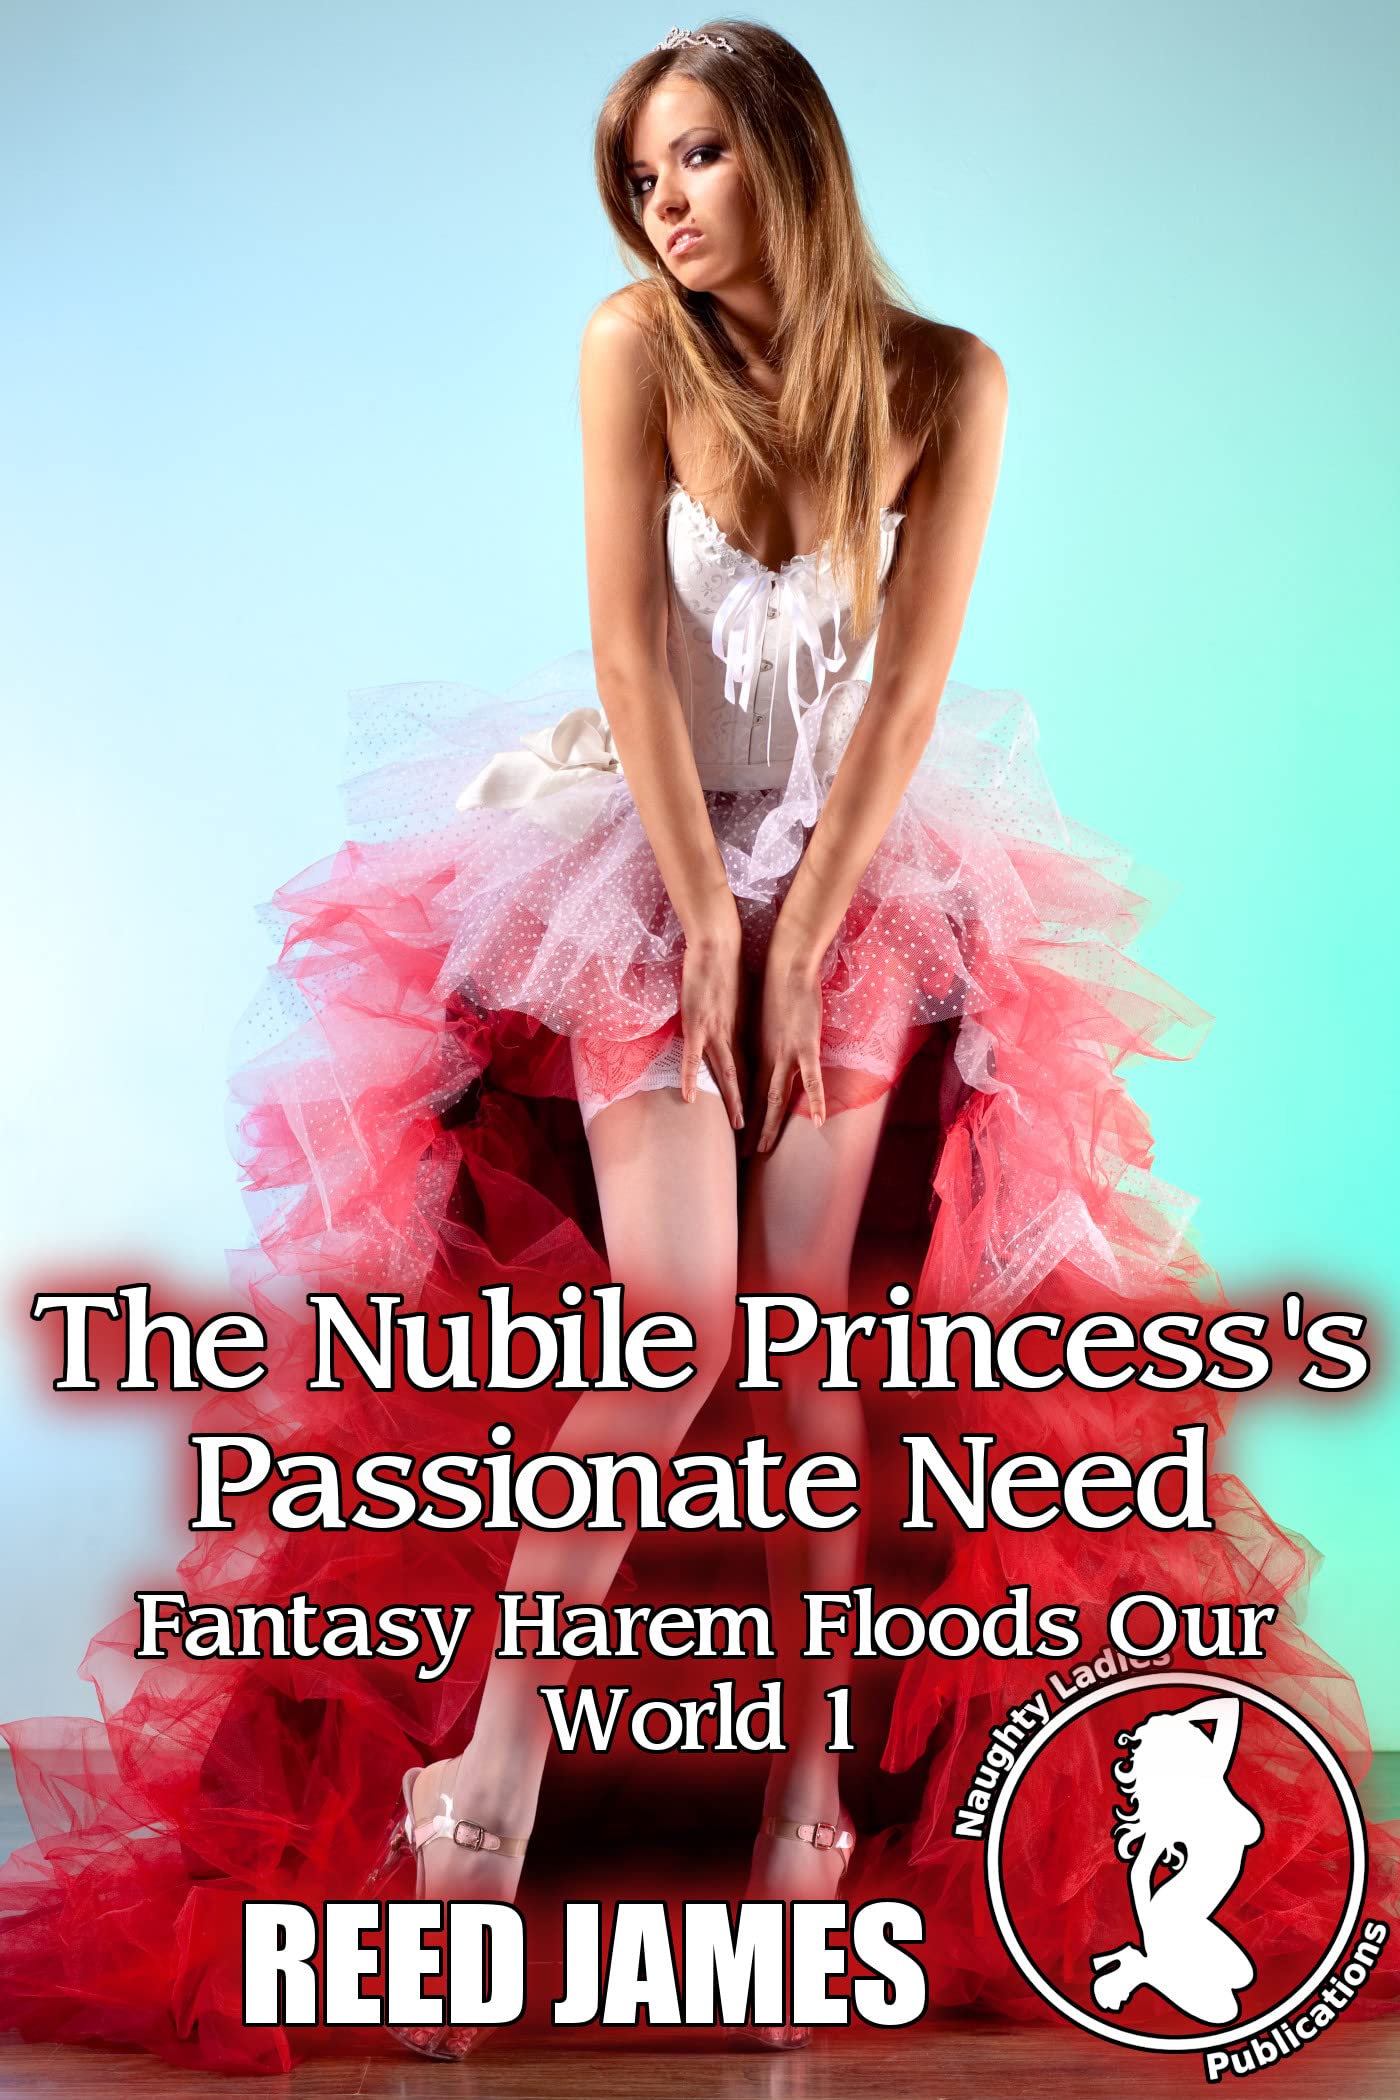 The Nubile Princess's Passionate Need